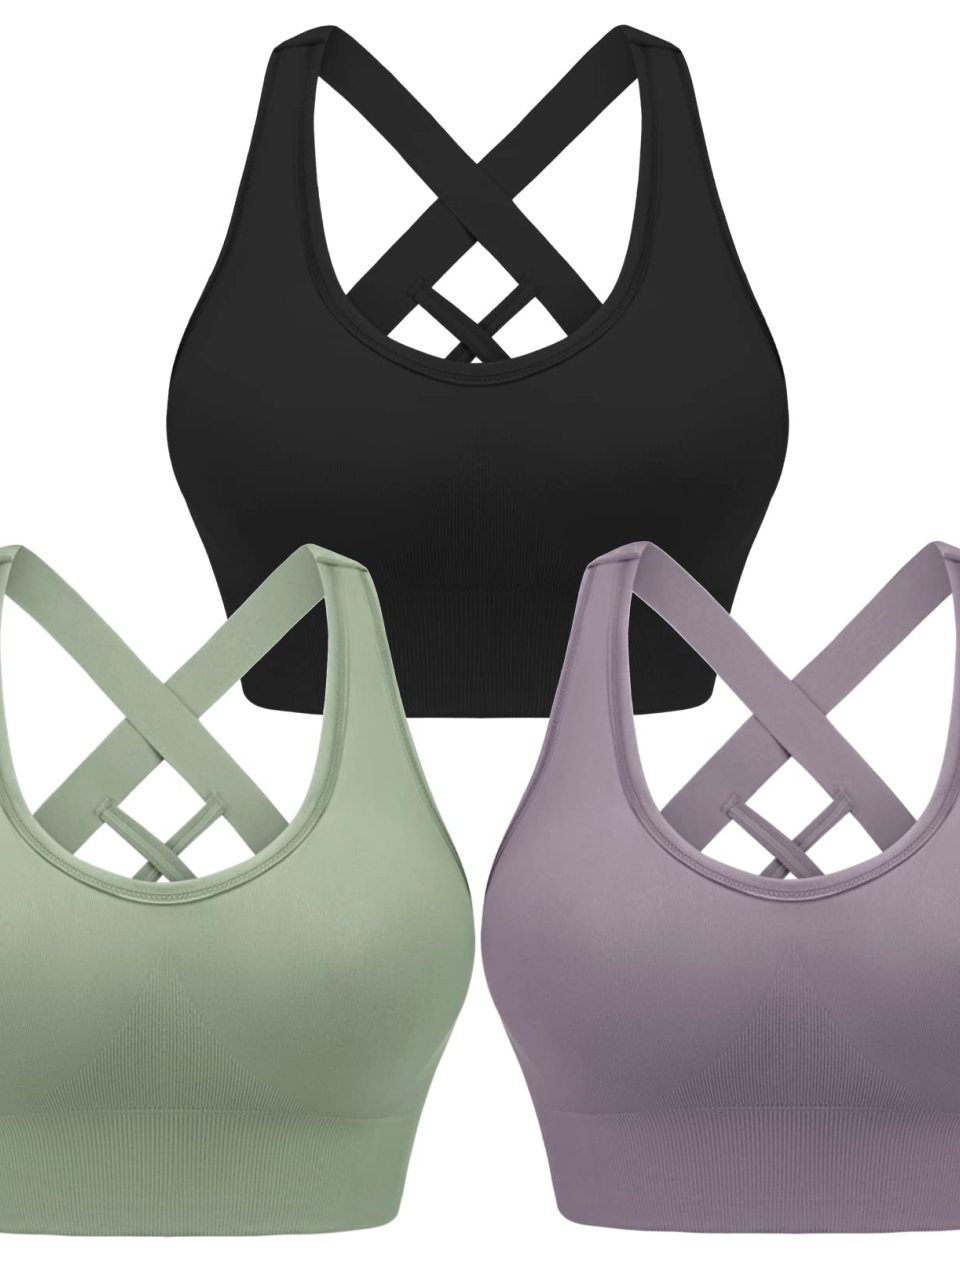 Women's cross strap seamless back sports bra